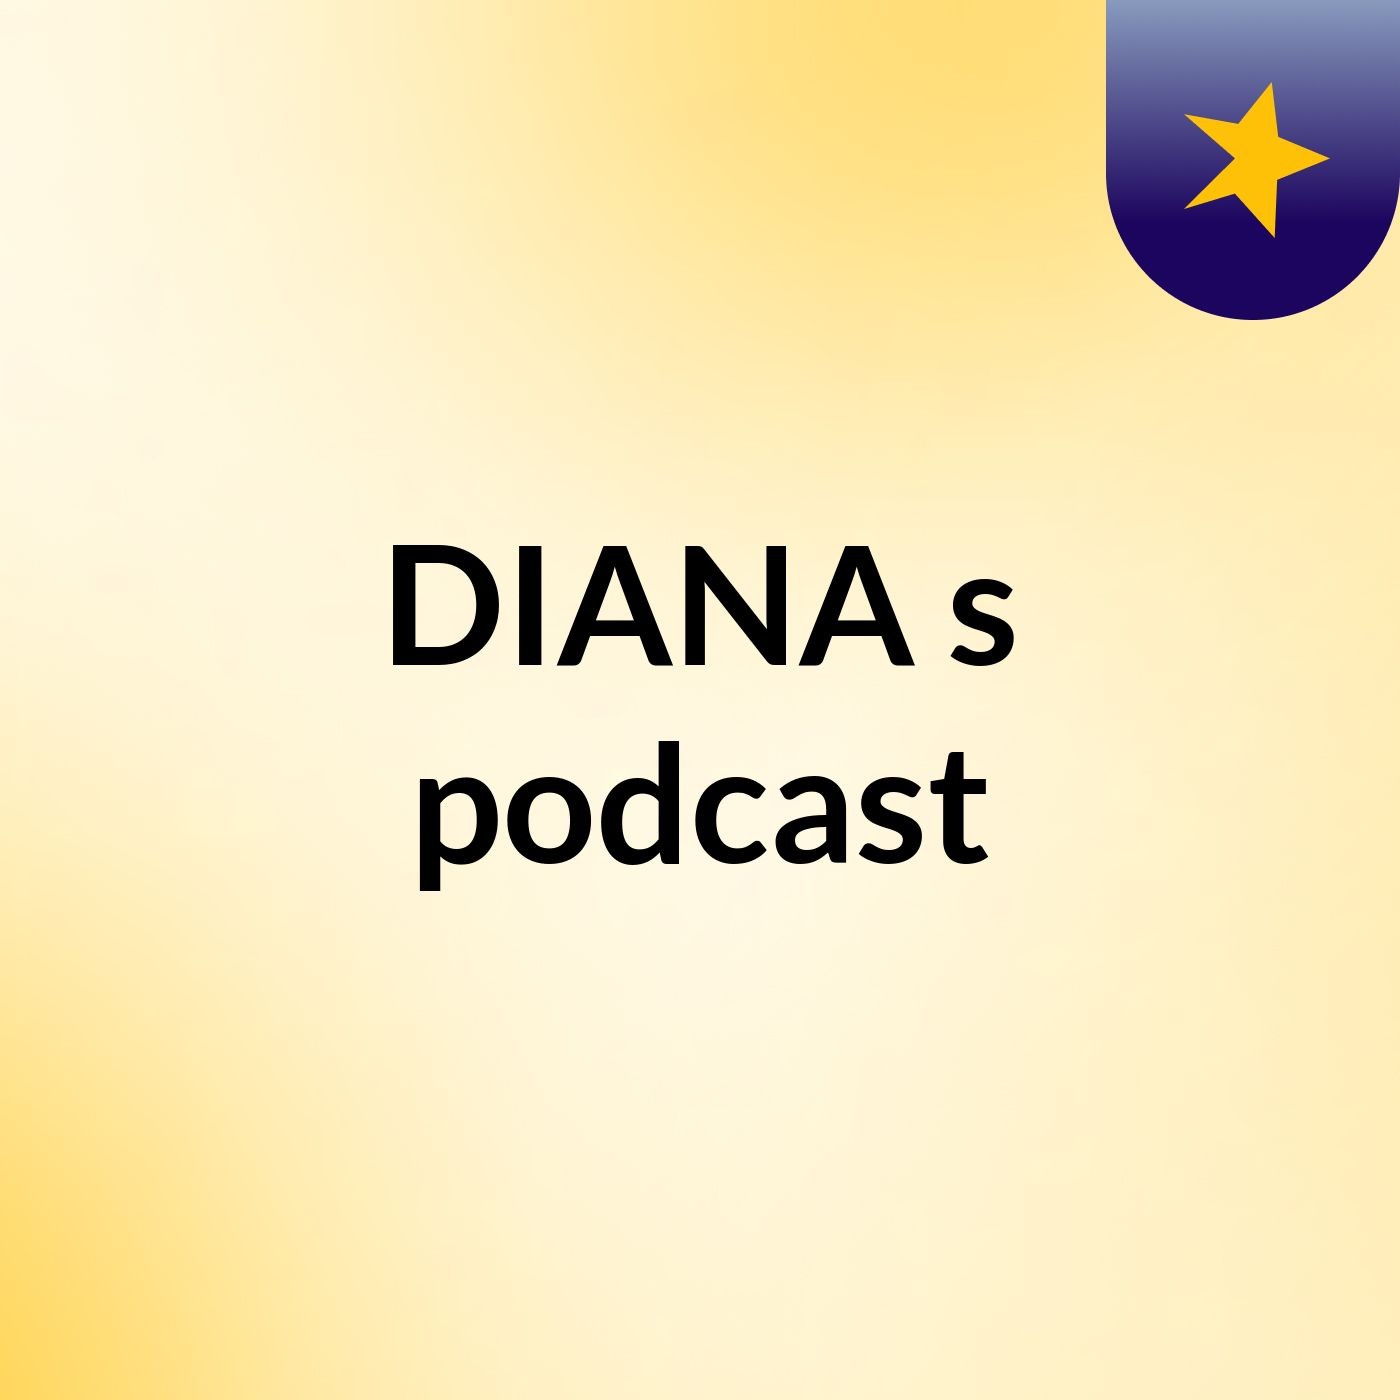 DIANA's podcast